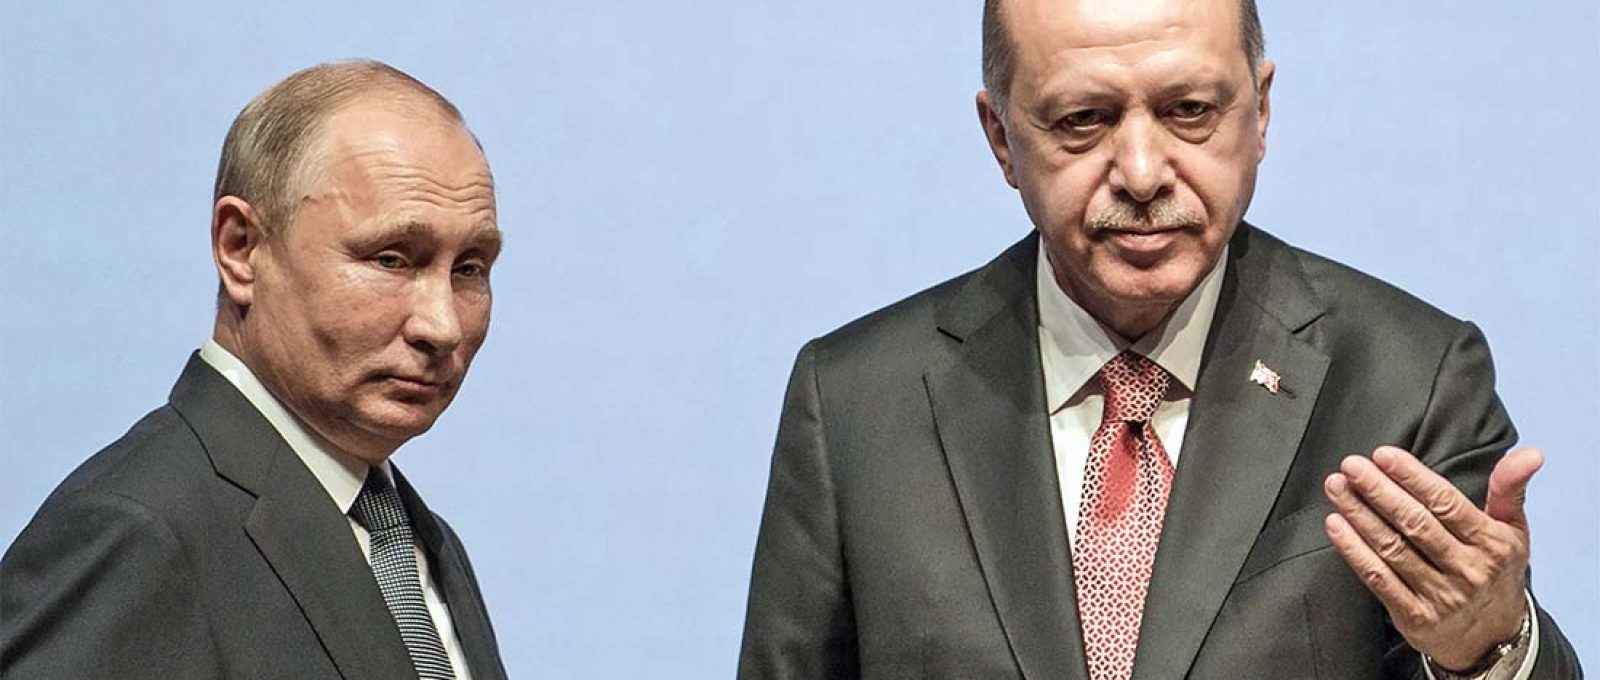 Vladimir Putin, à esquerda, e Recep Tayyip Erdoğan (Bulent Kilic/AFP/Getty Images).